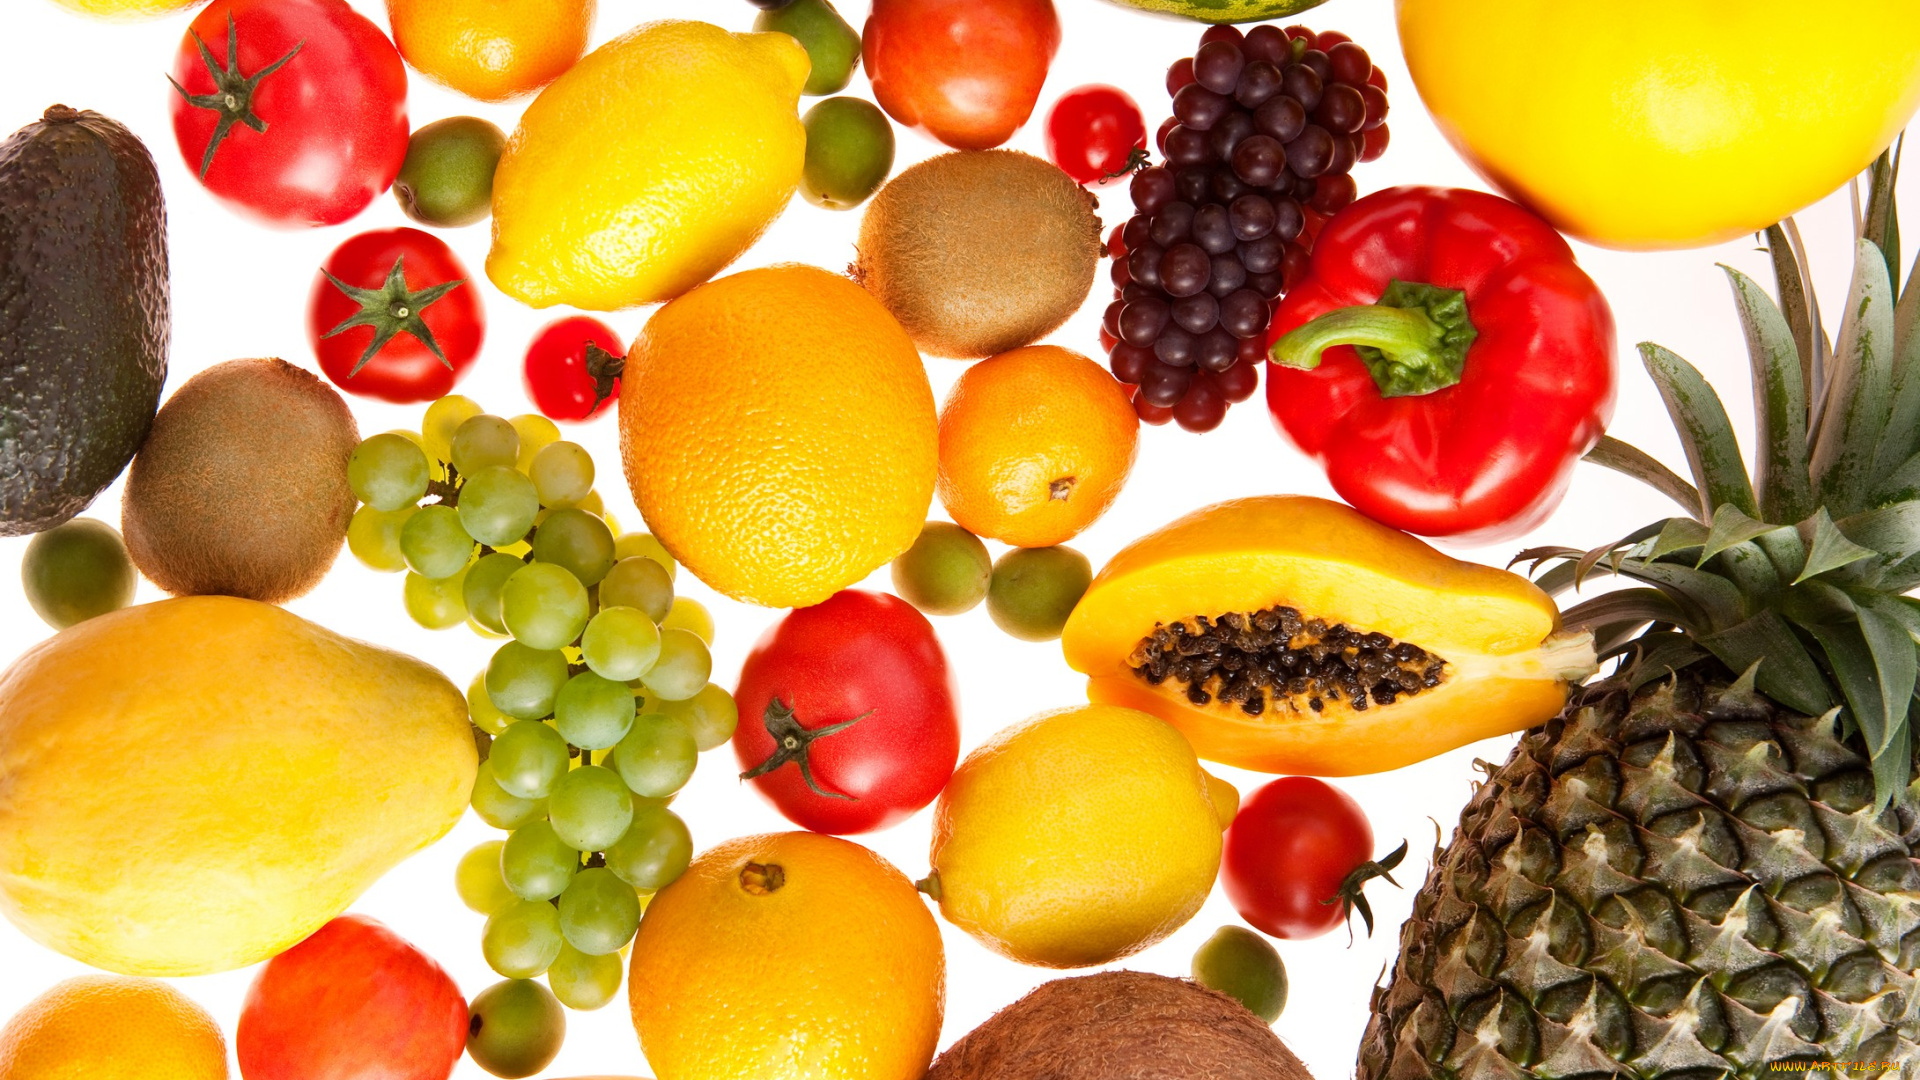 еда, фрукты, овощи, вместе, томаты, помидоры, лимон, апельсин, виноград, ананас